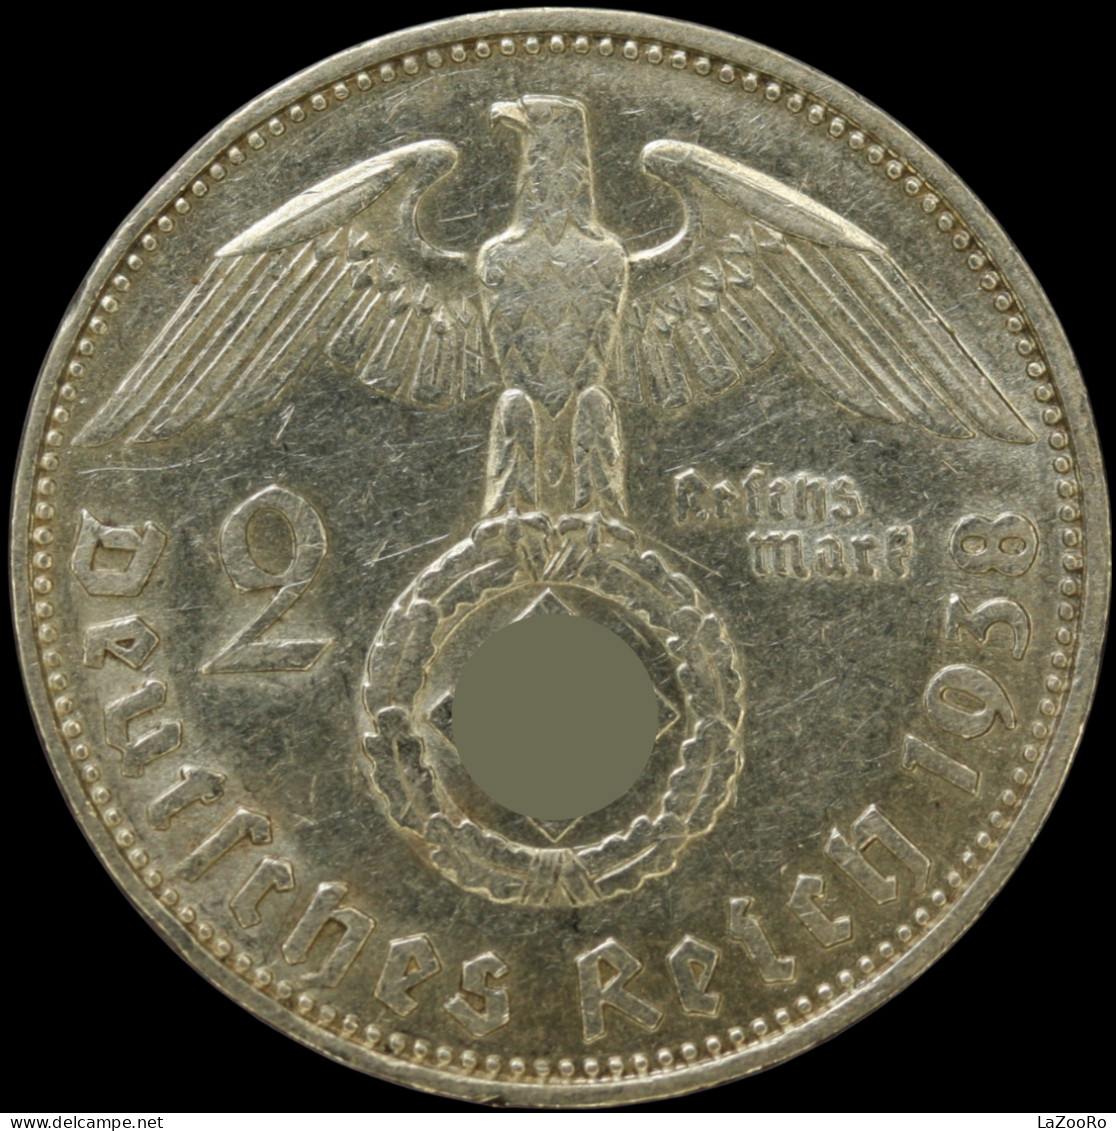 LaZooRo: Germany 2 Mark 1938 E XF / UNC - Silver - 2 Reichsmark